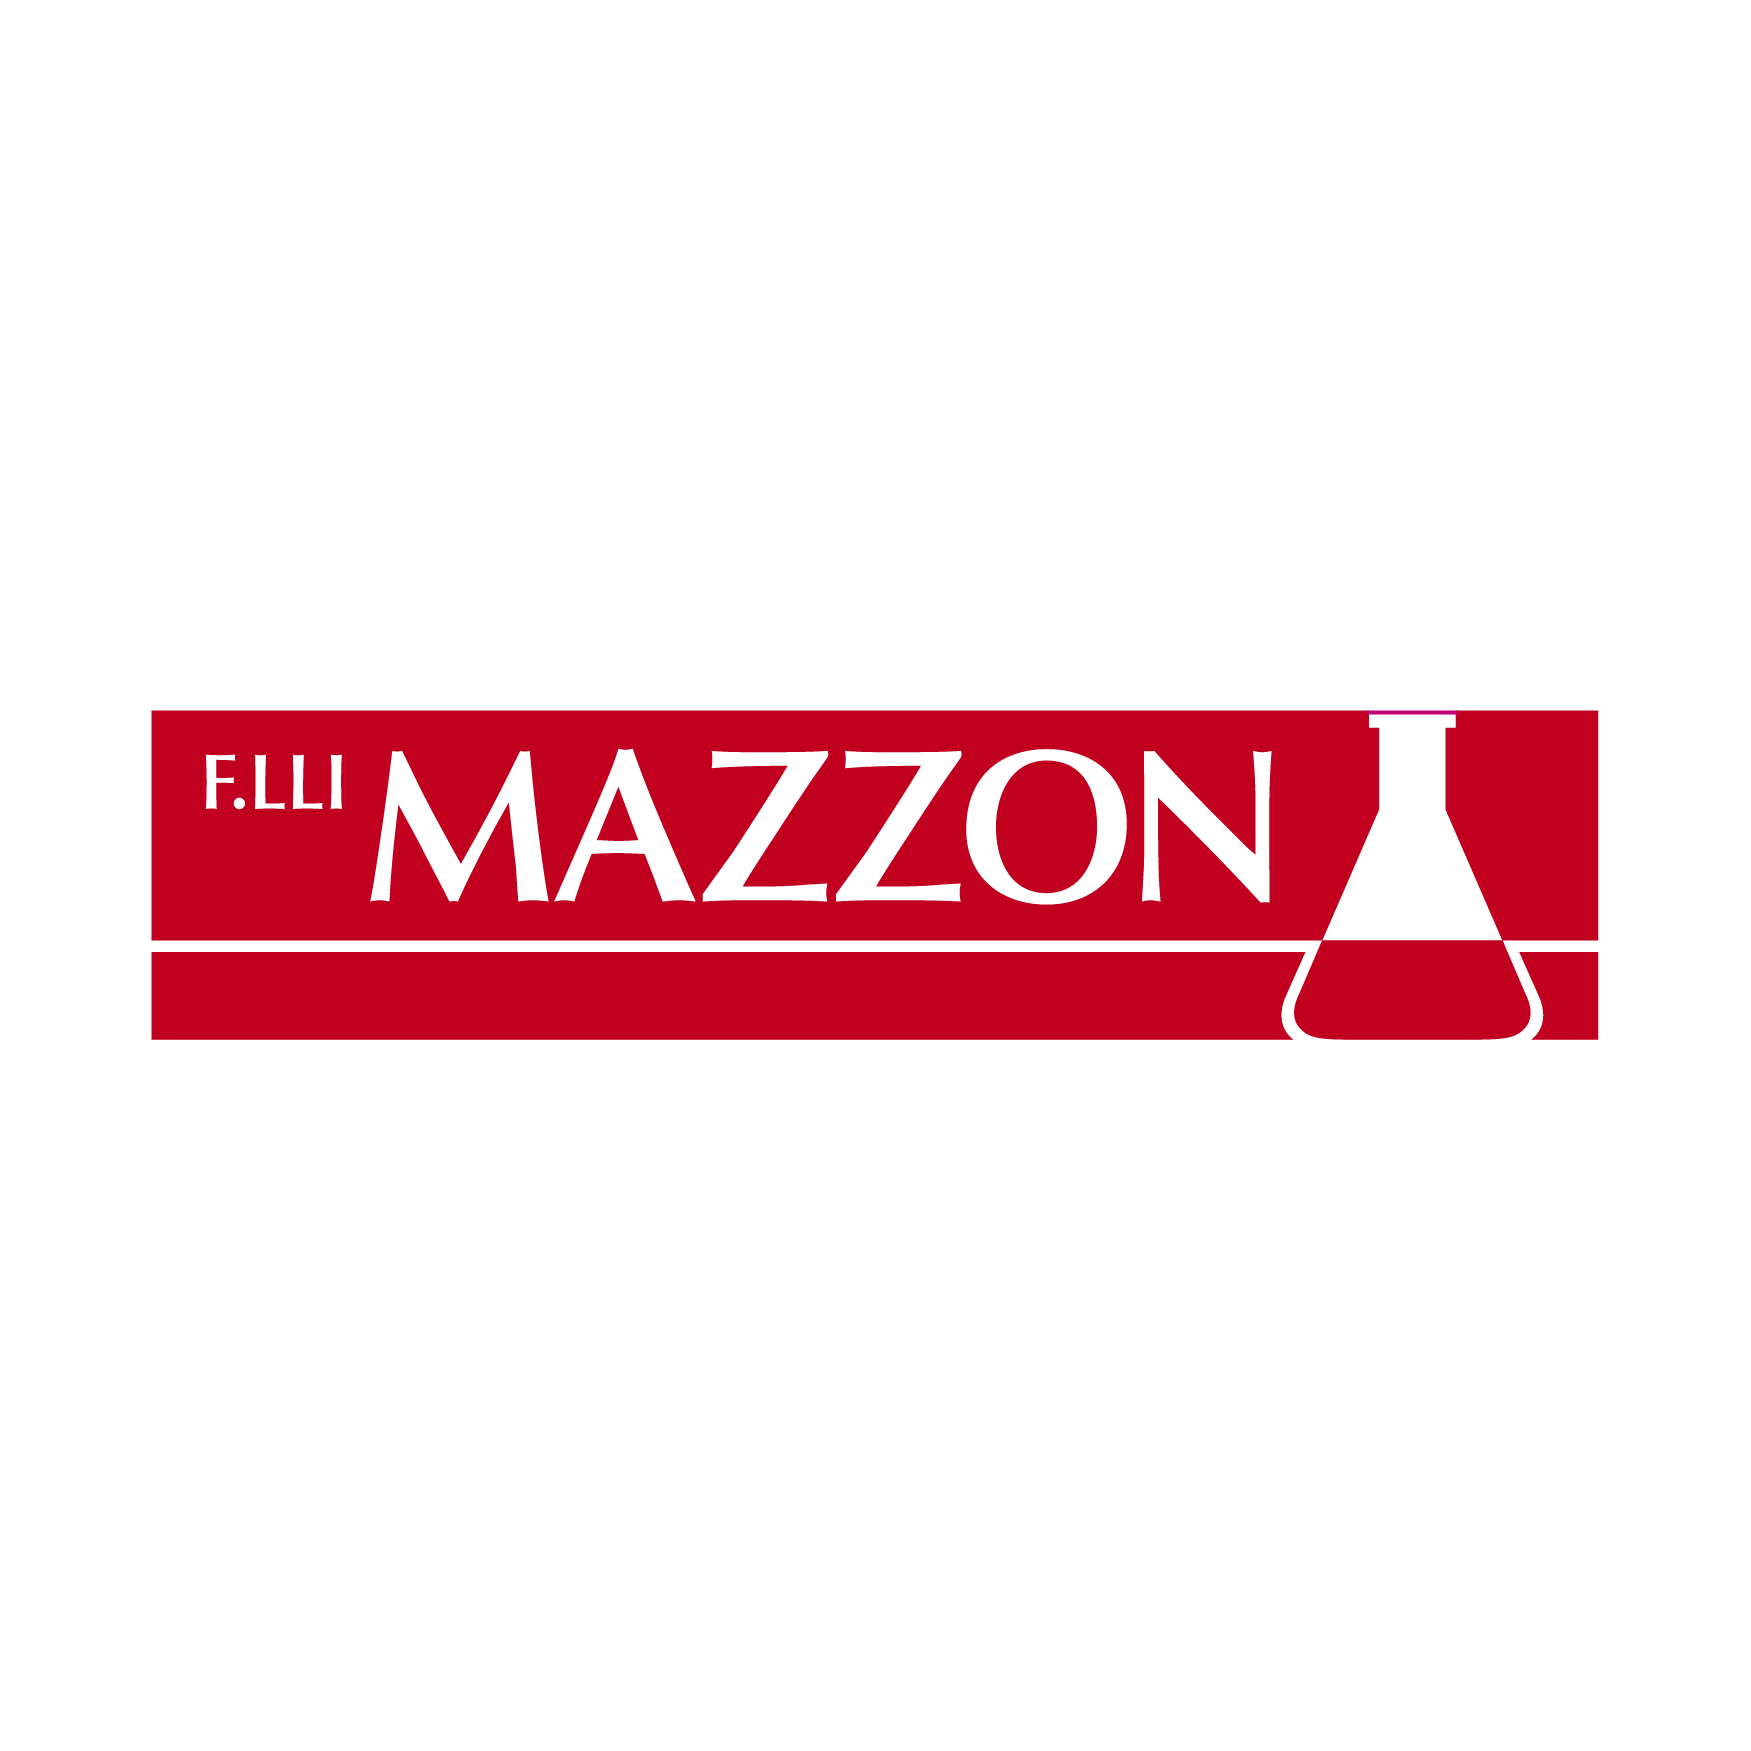 Partners | Mazzon | Colaboradores | Euskatfund, Maquinaria y productos de fundición